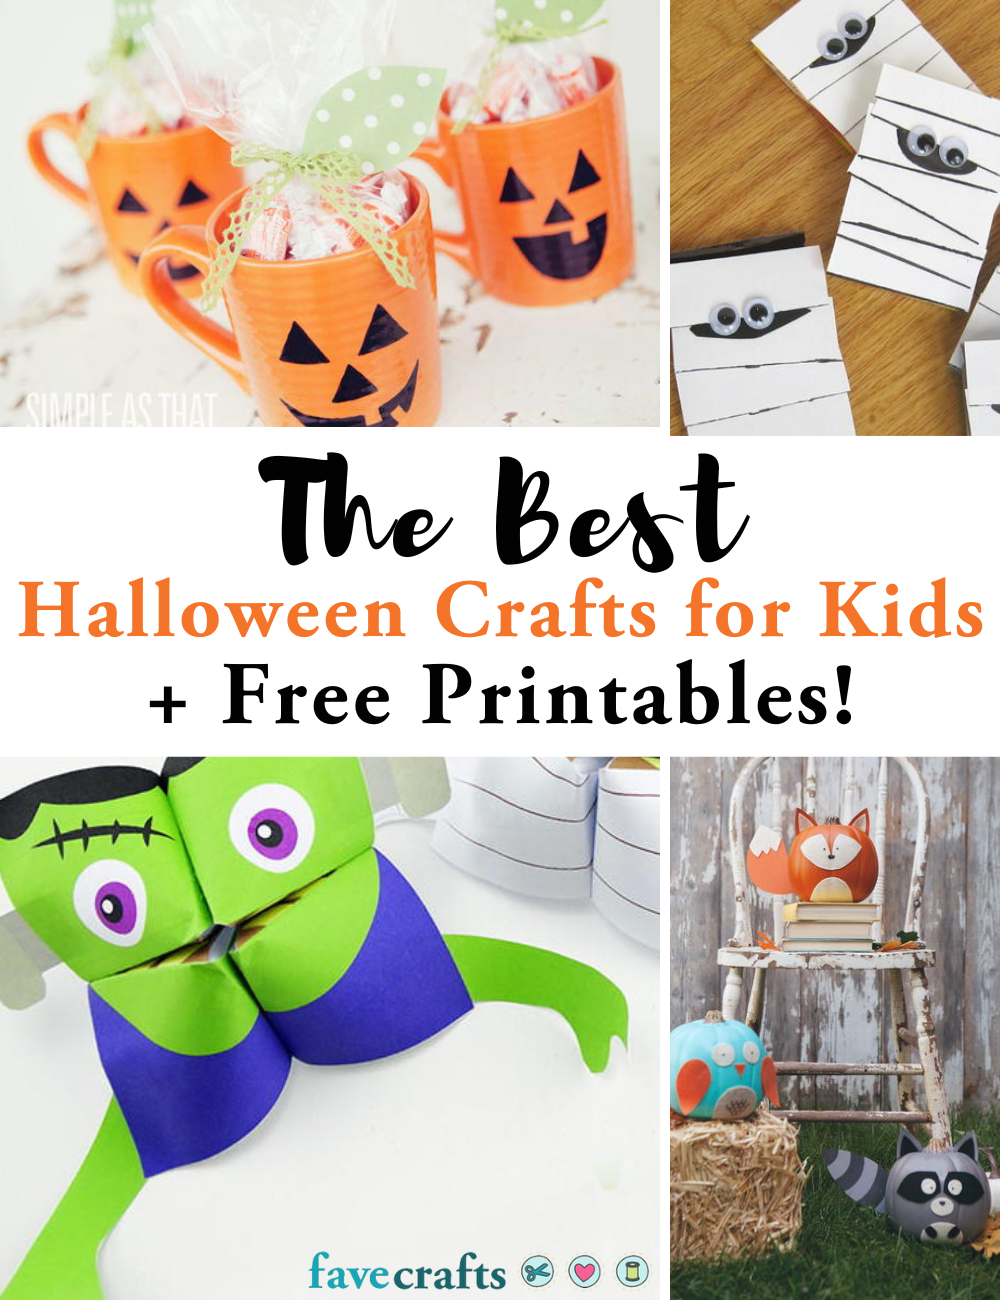 Paper Plate Eyeball Craft Idea For Halloween  Halloween crafts for kids,  Halloween preschool, Fun crafts for kids